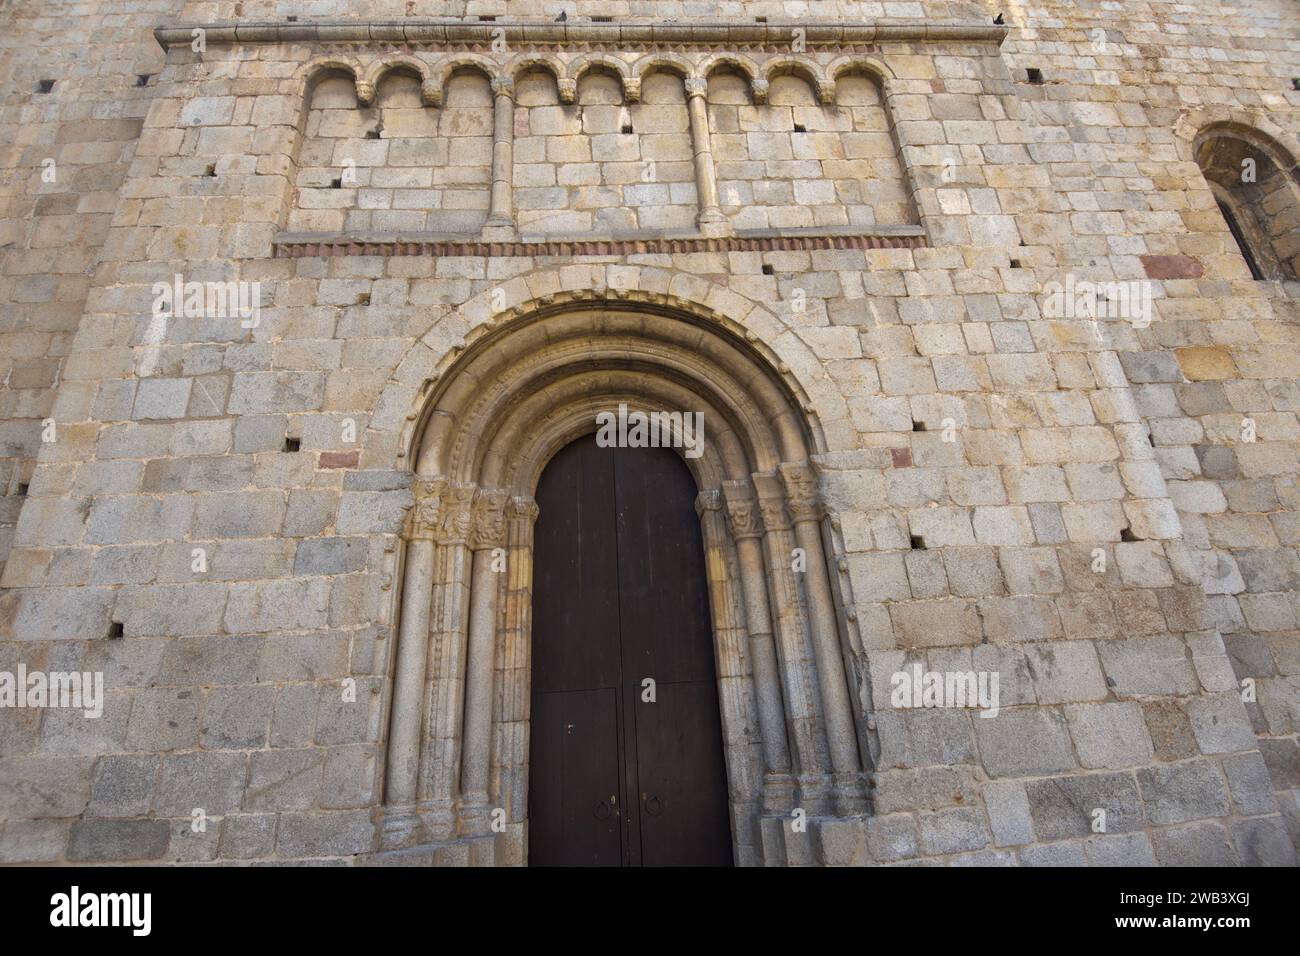 Porte de la cathédrale Santa Maria d’Urgell, la Seu d’Urgell, province de Lleida, Catalogne, Espagne Banque D'Images